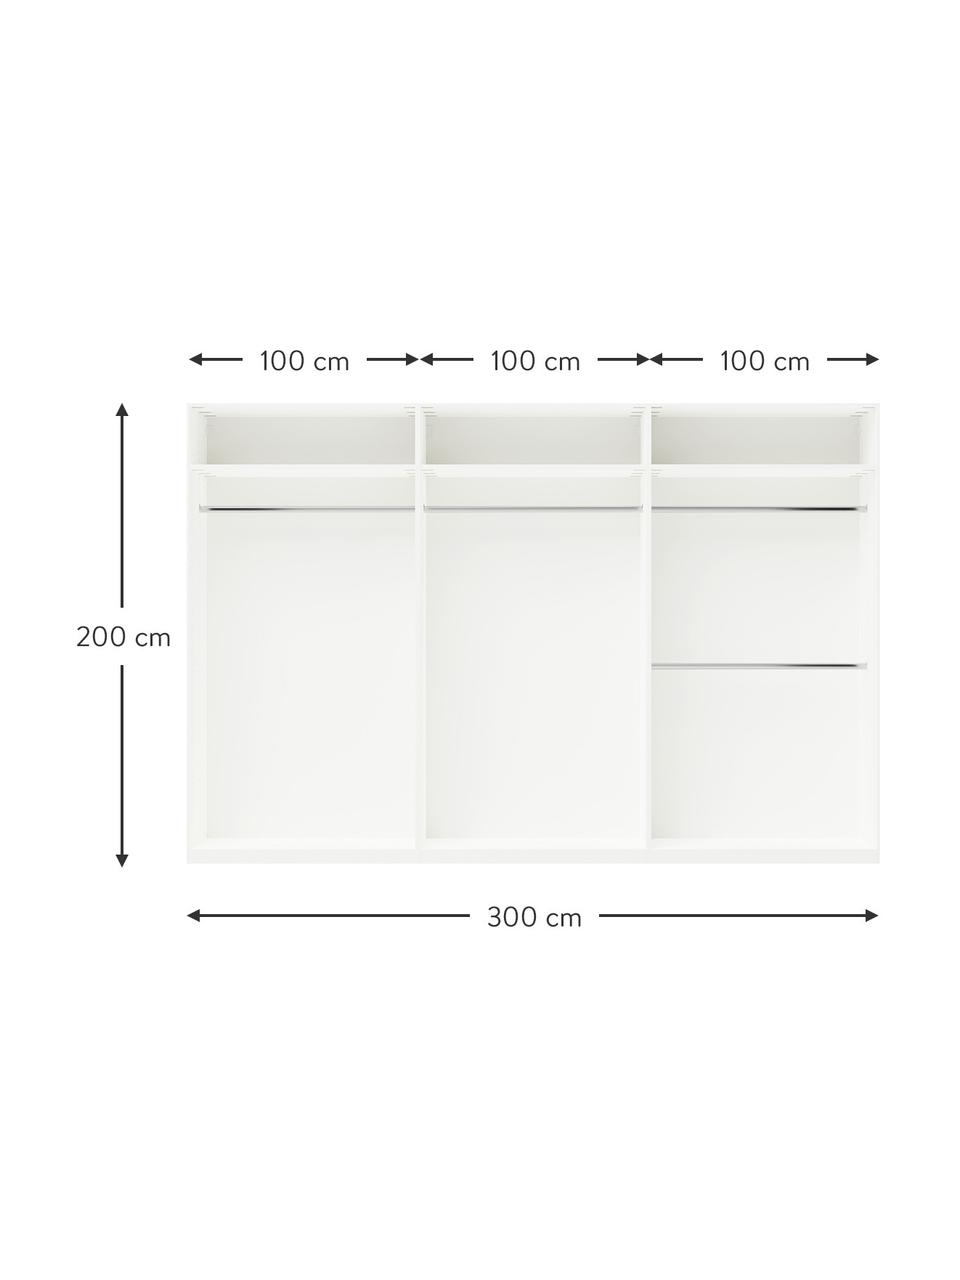 Modulární skříň s otočnými dveřmi Charlotte, šířka 300 cm, více variant, Bílá, Interiér Basic, výška 200 cm